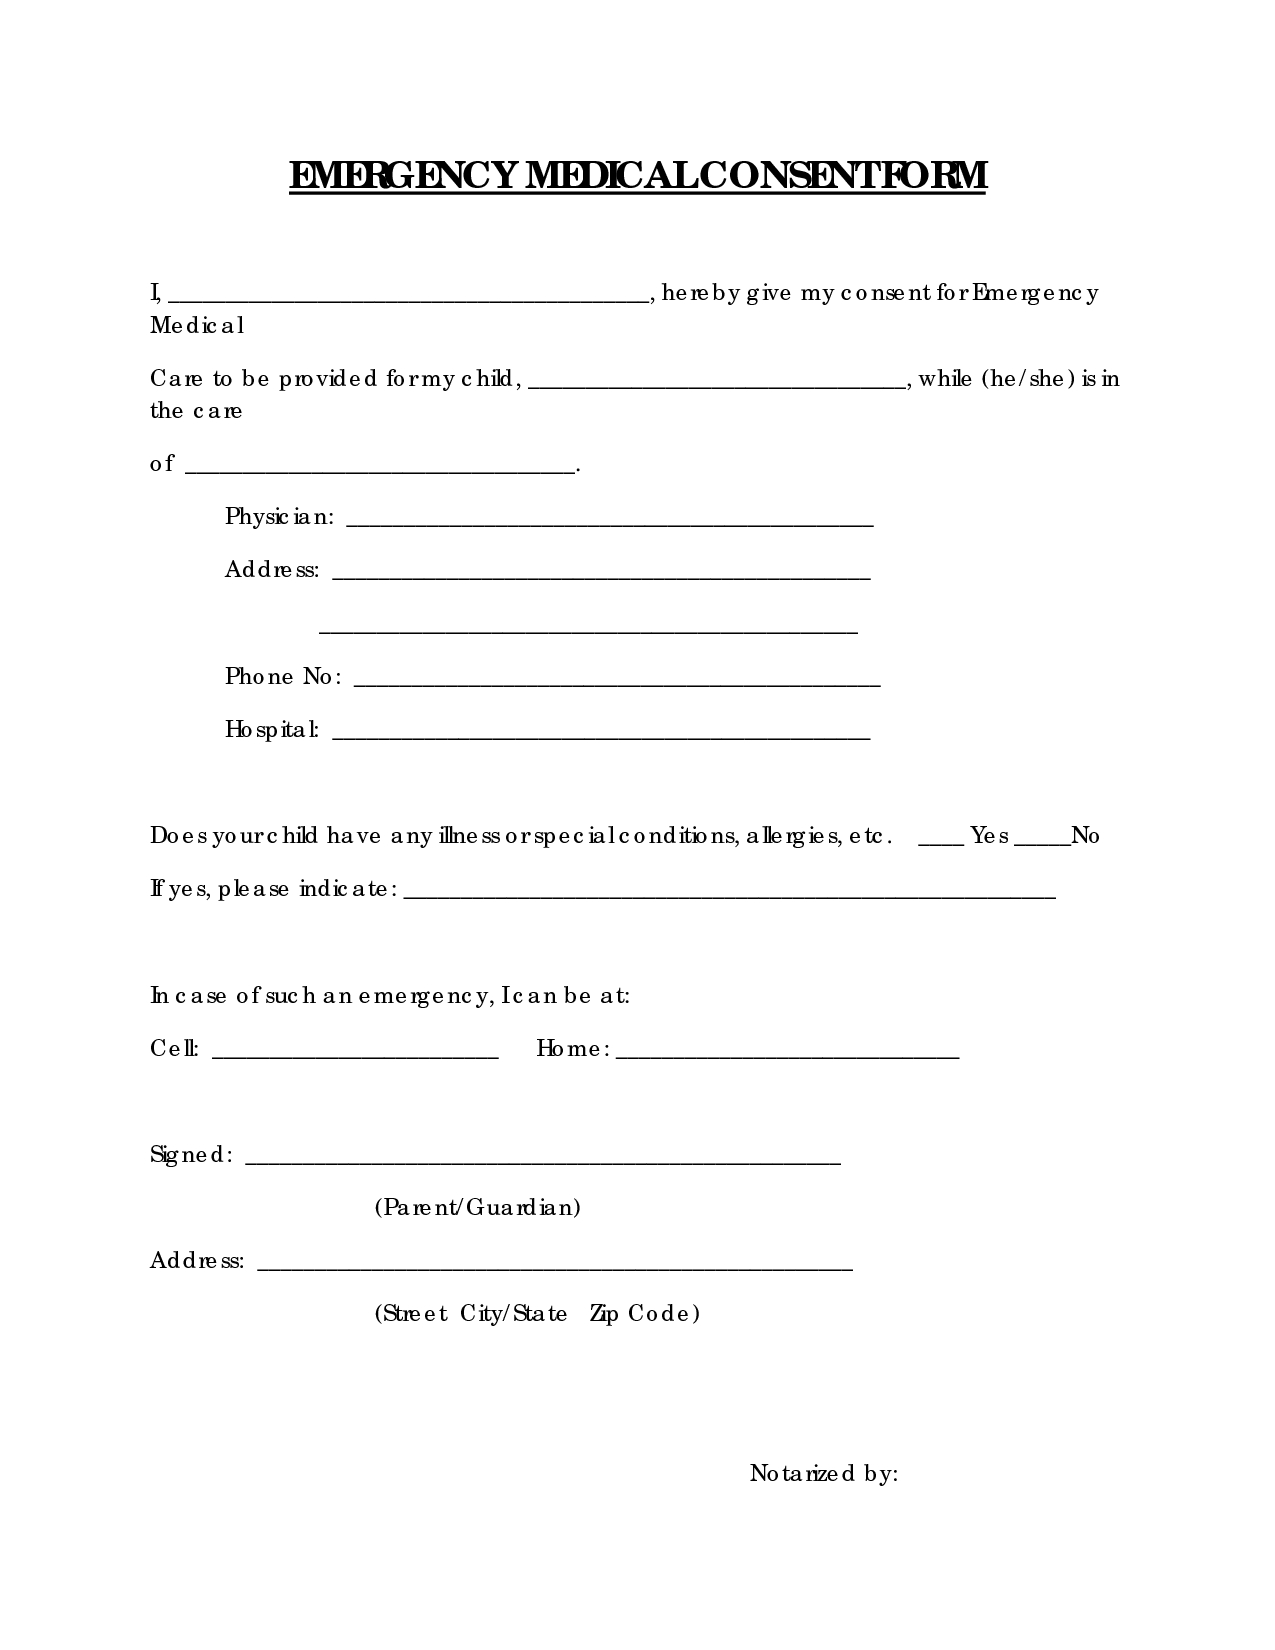 Free Printable Medical Consent Form | Emergency Medical Consent Form - Free Printable Medical Forms Kit